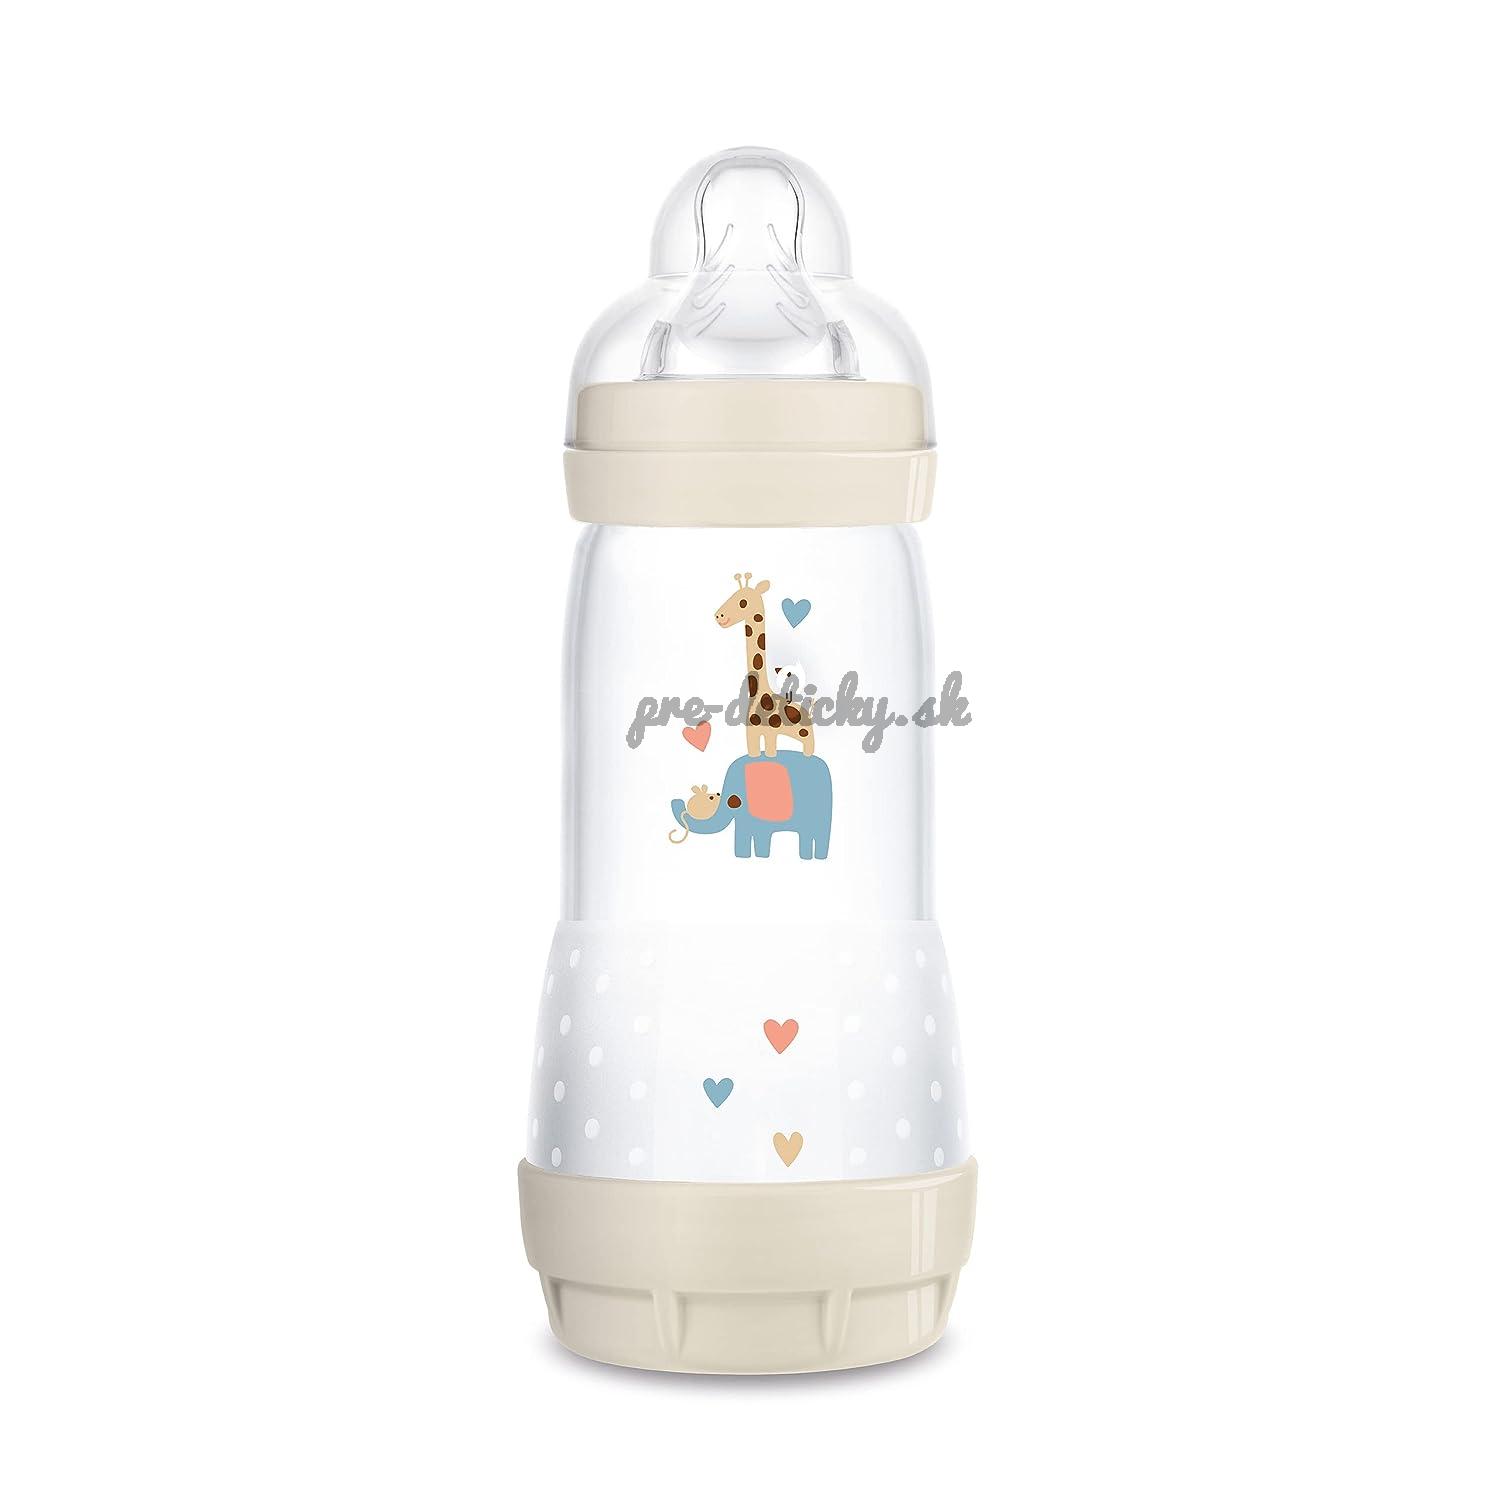 MAM fľaša Baby Bottle Anti-Colic 320ml - Beige